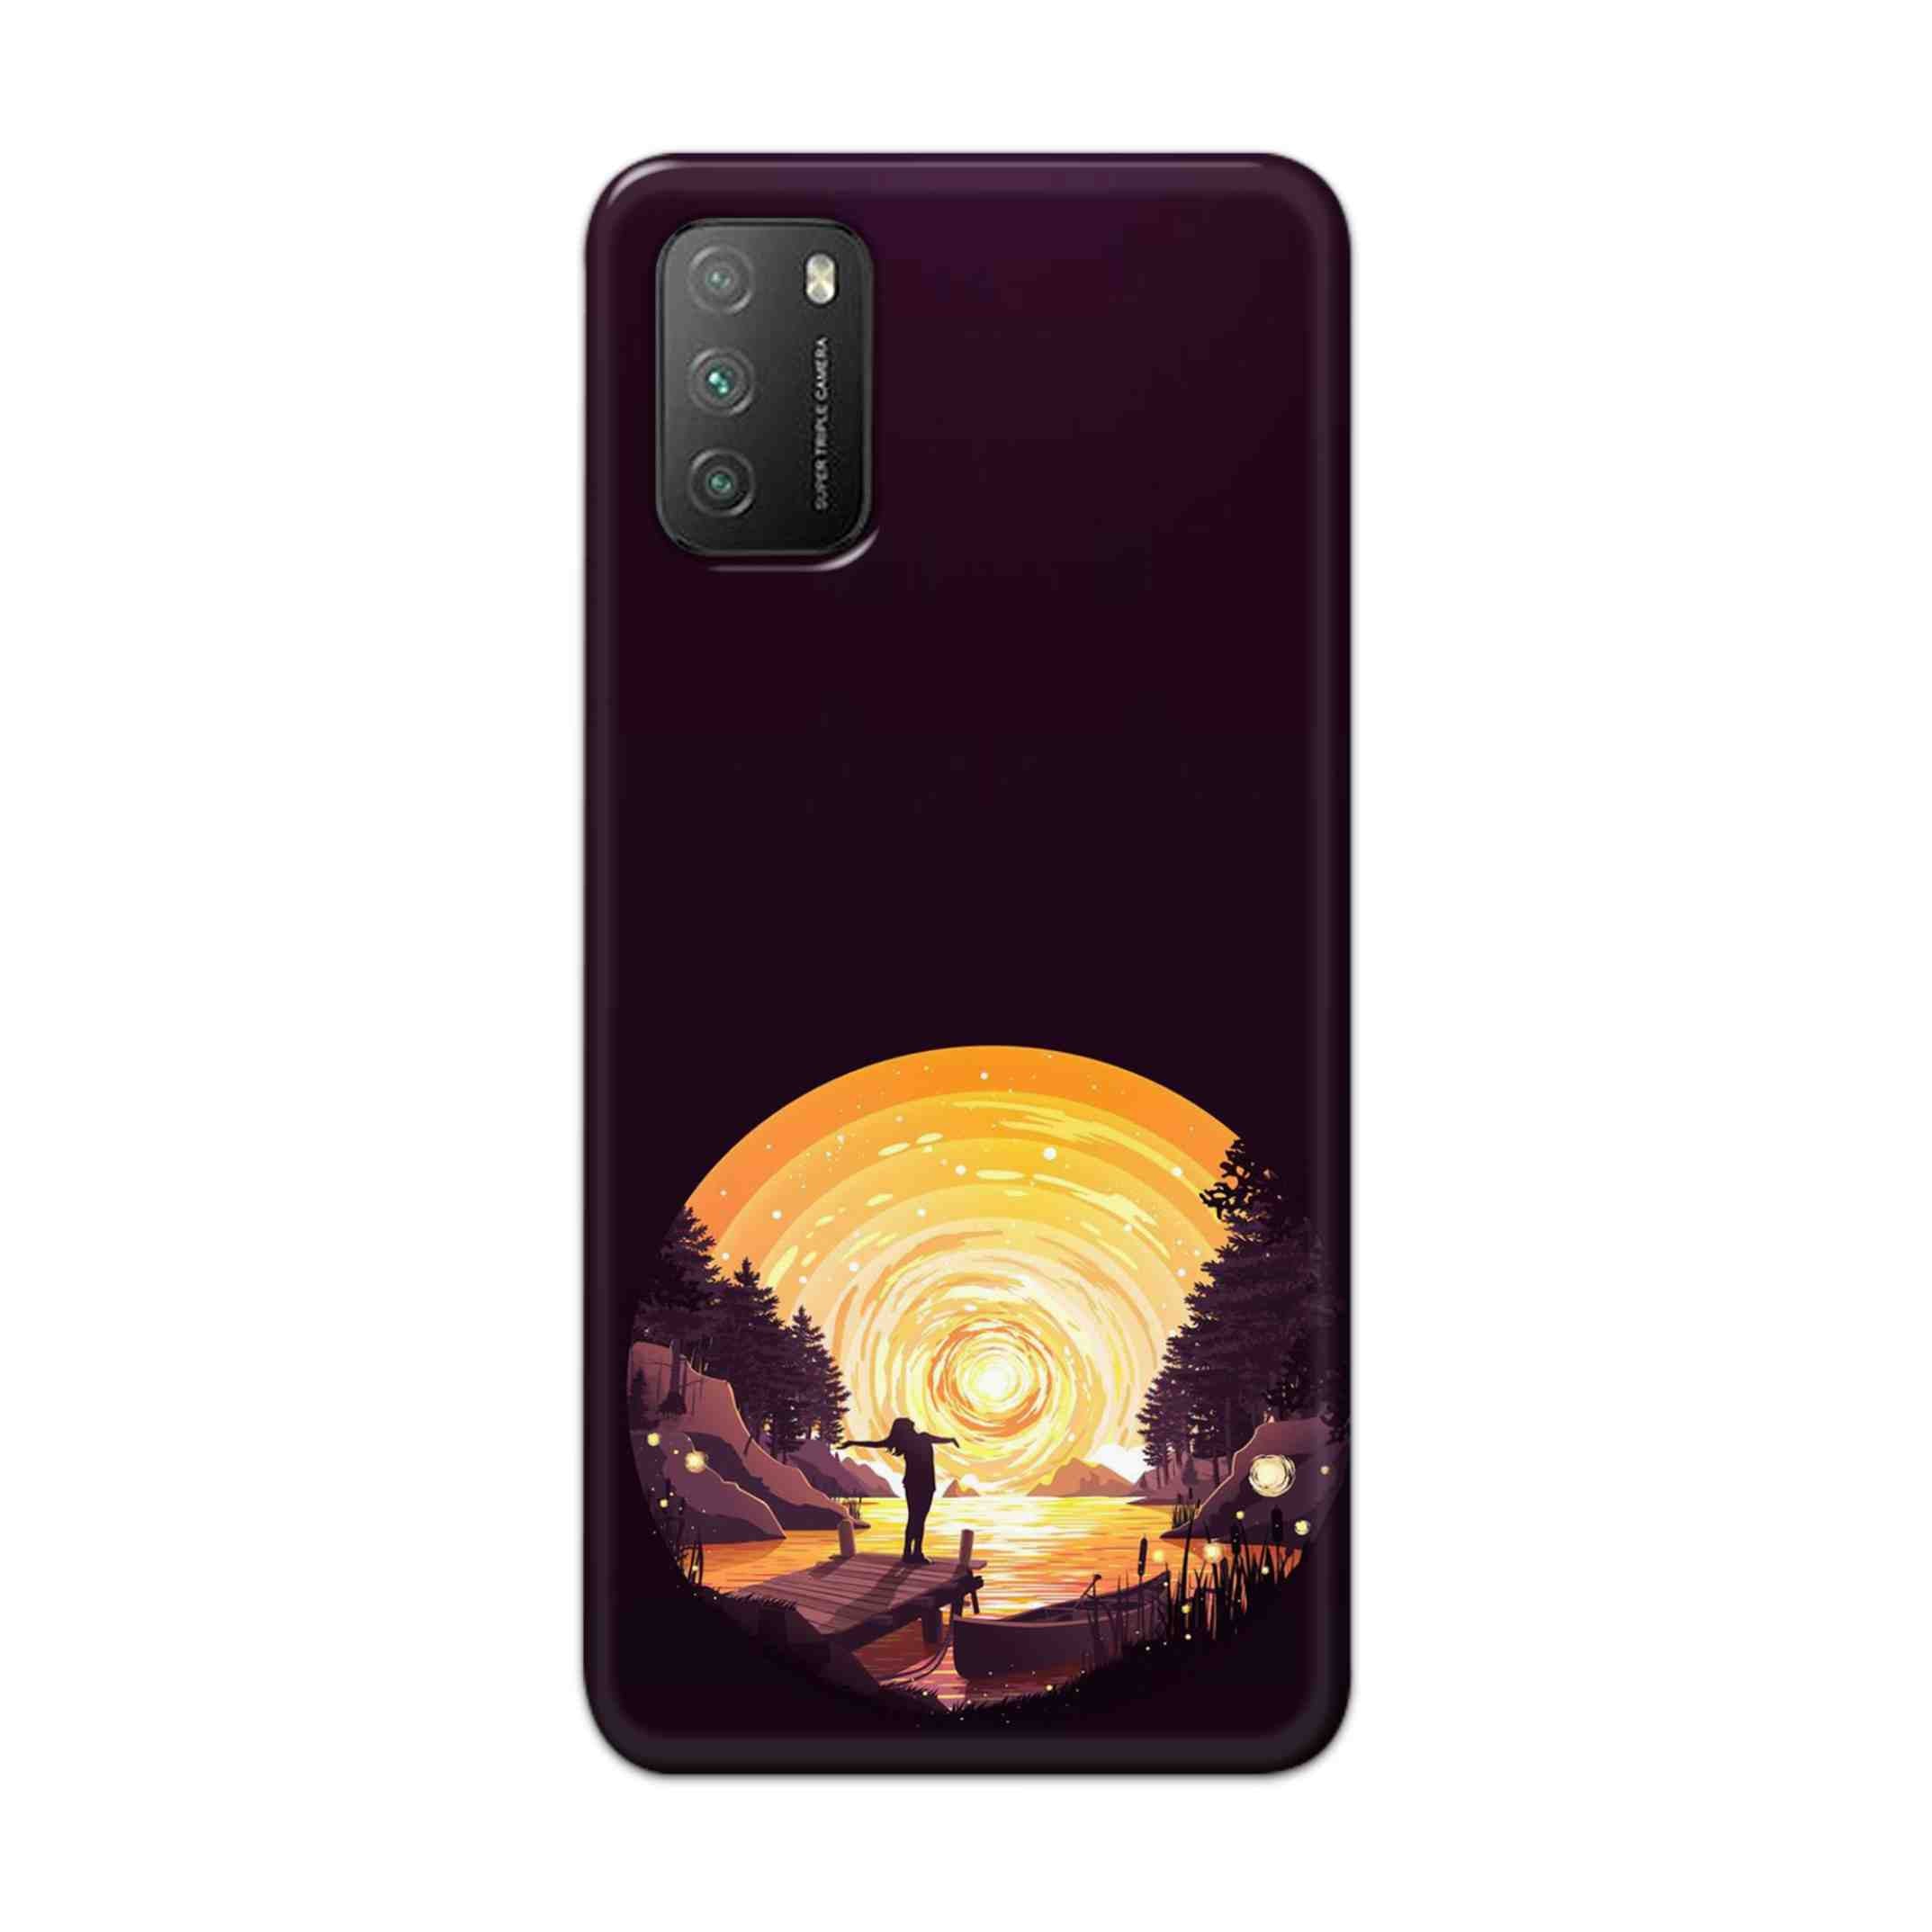 Buy Night Sunrise Hard Back Mobile Phone Case Cover For Poco M3 Online